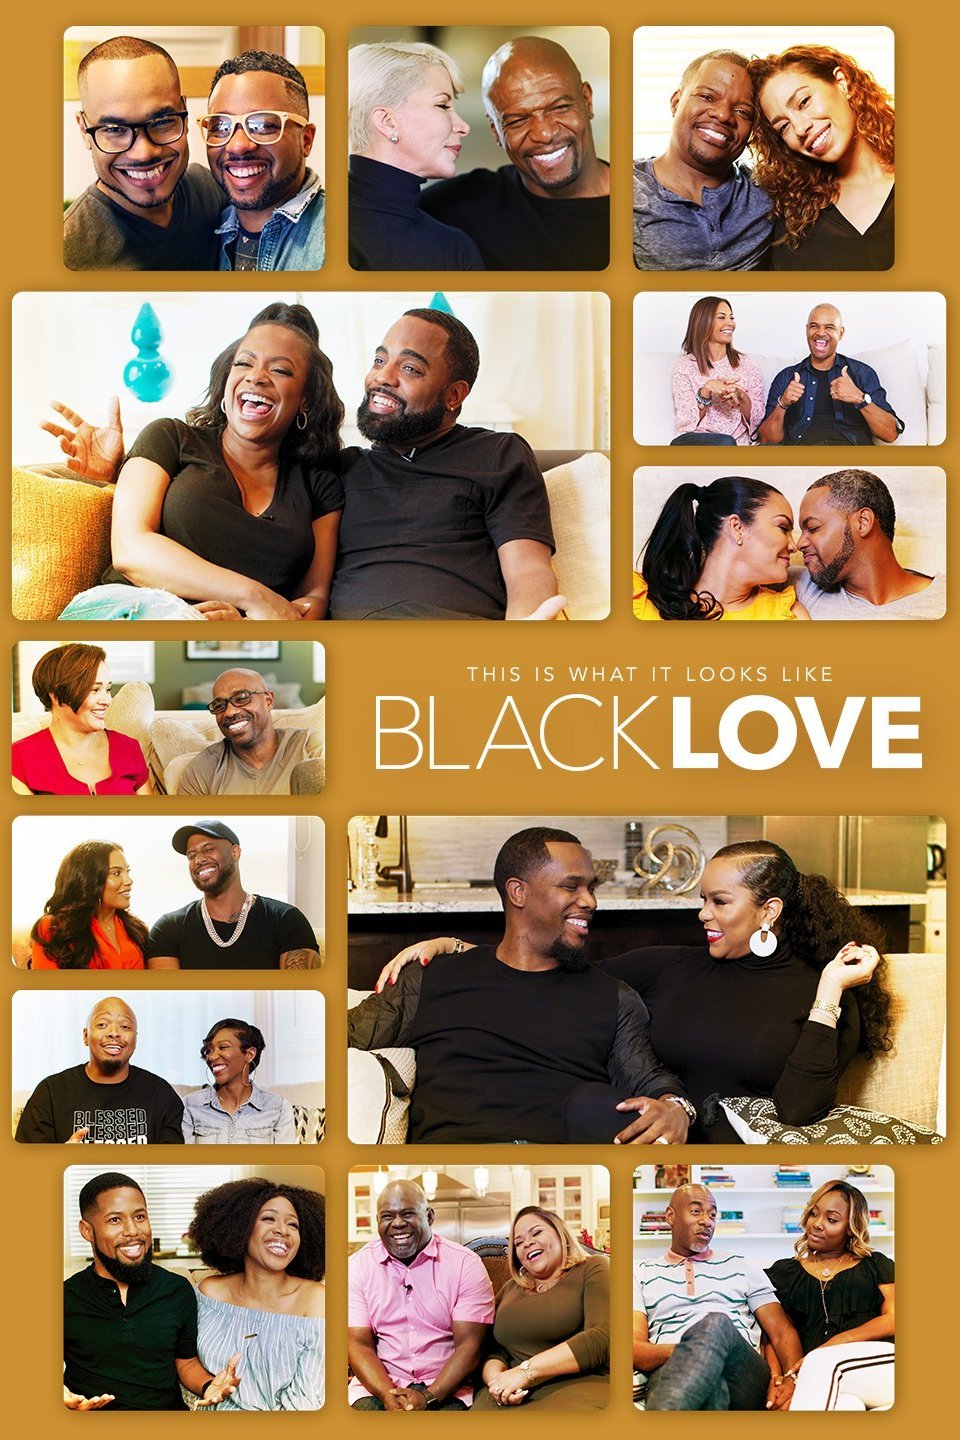 Real black love